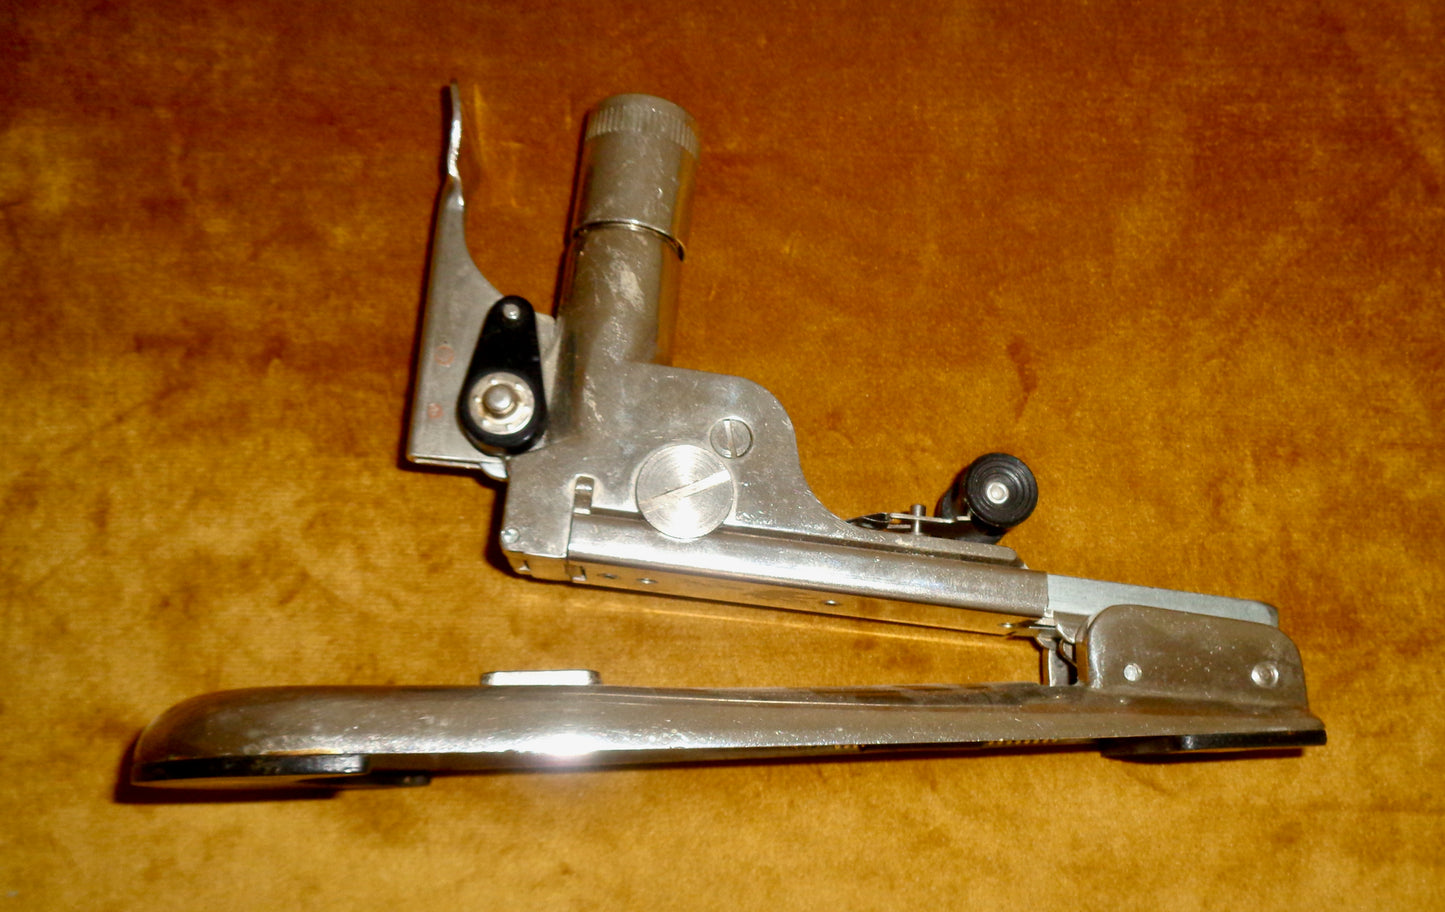 1930s Vanguard Auto Desk Stapler